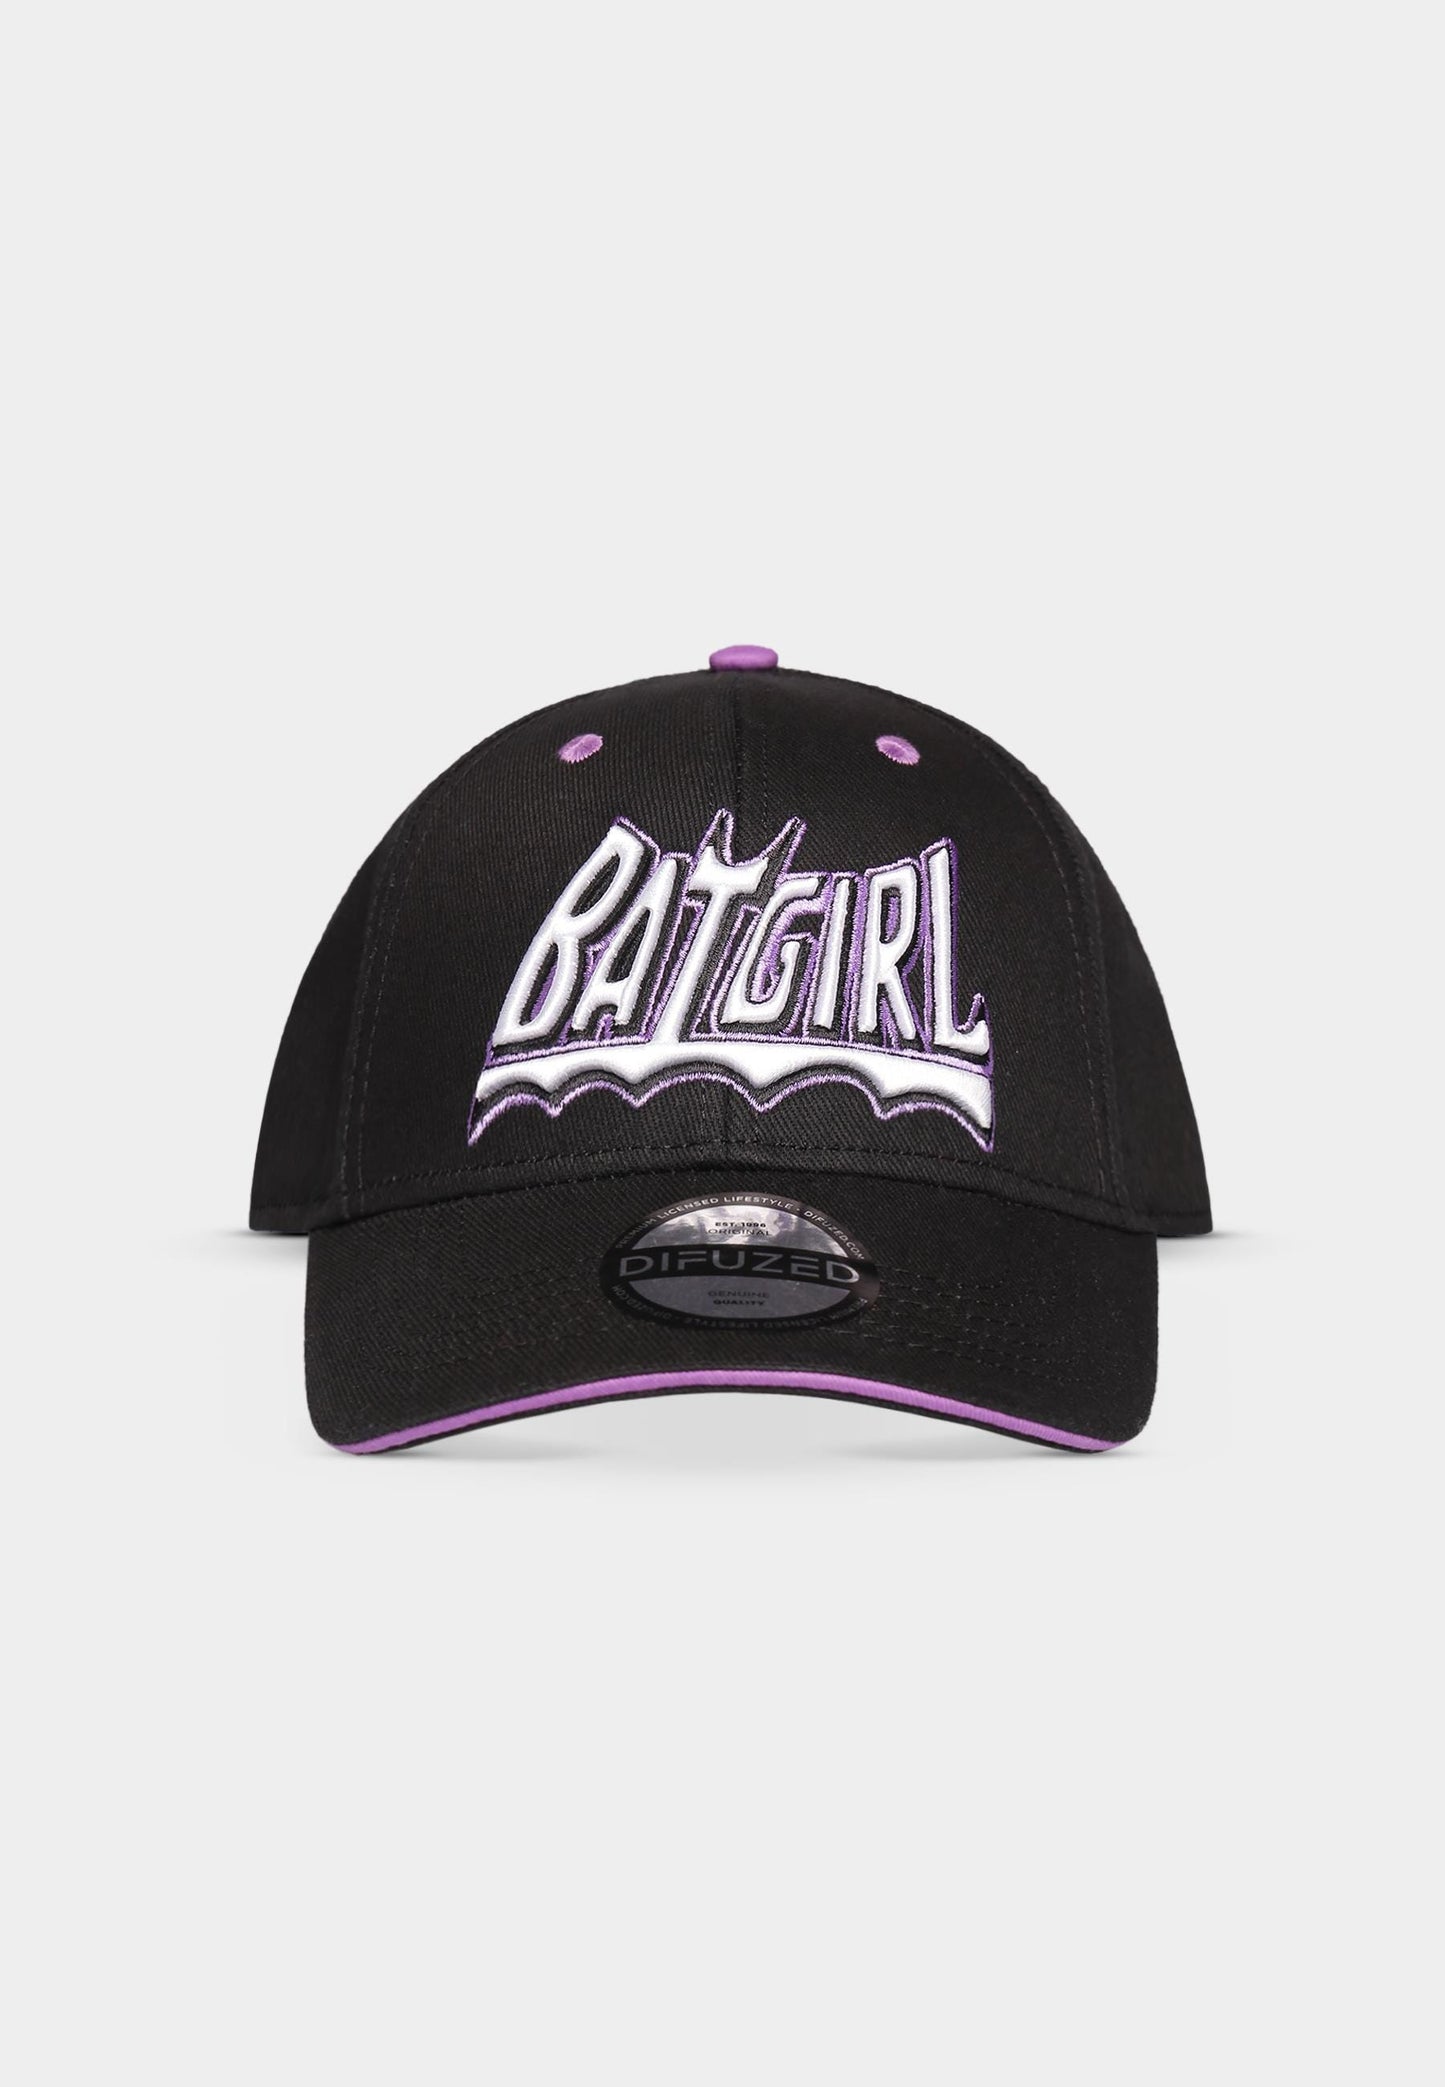 Warner - Bat Girl - Logo - Women's Adjustable Cap